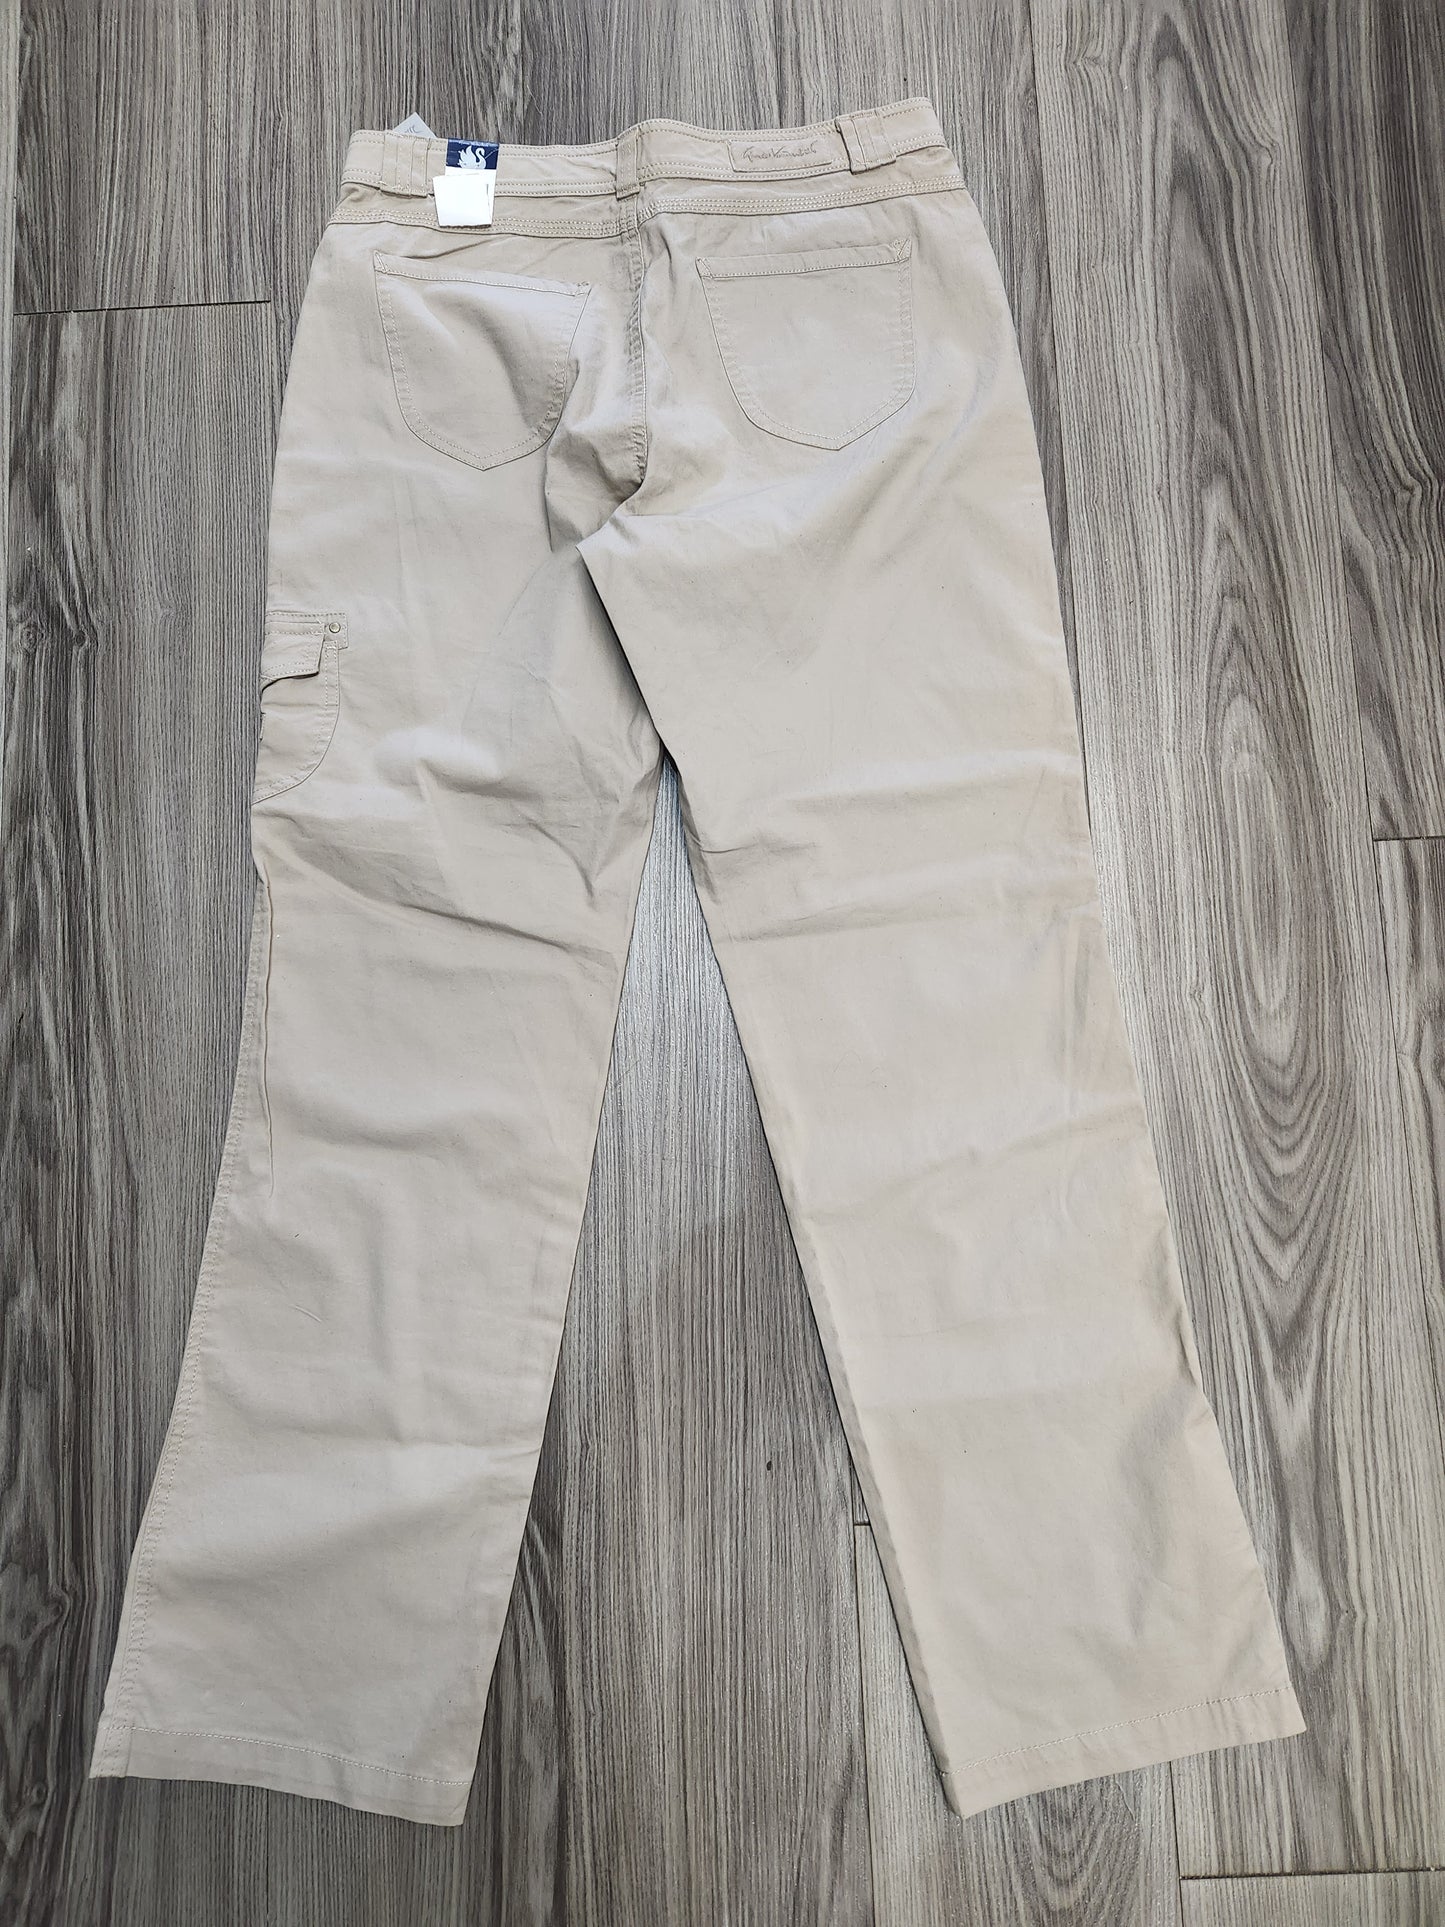 Pants Cargo & Utility By Gloria Vanderbilt  Size: 10